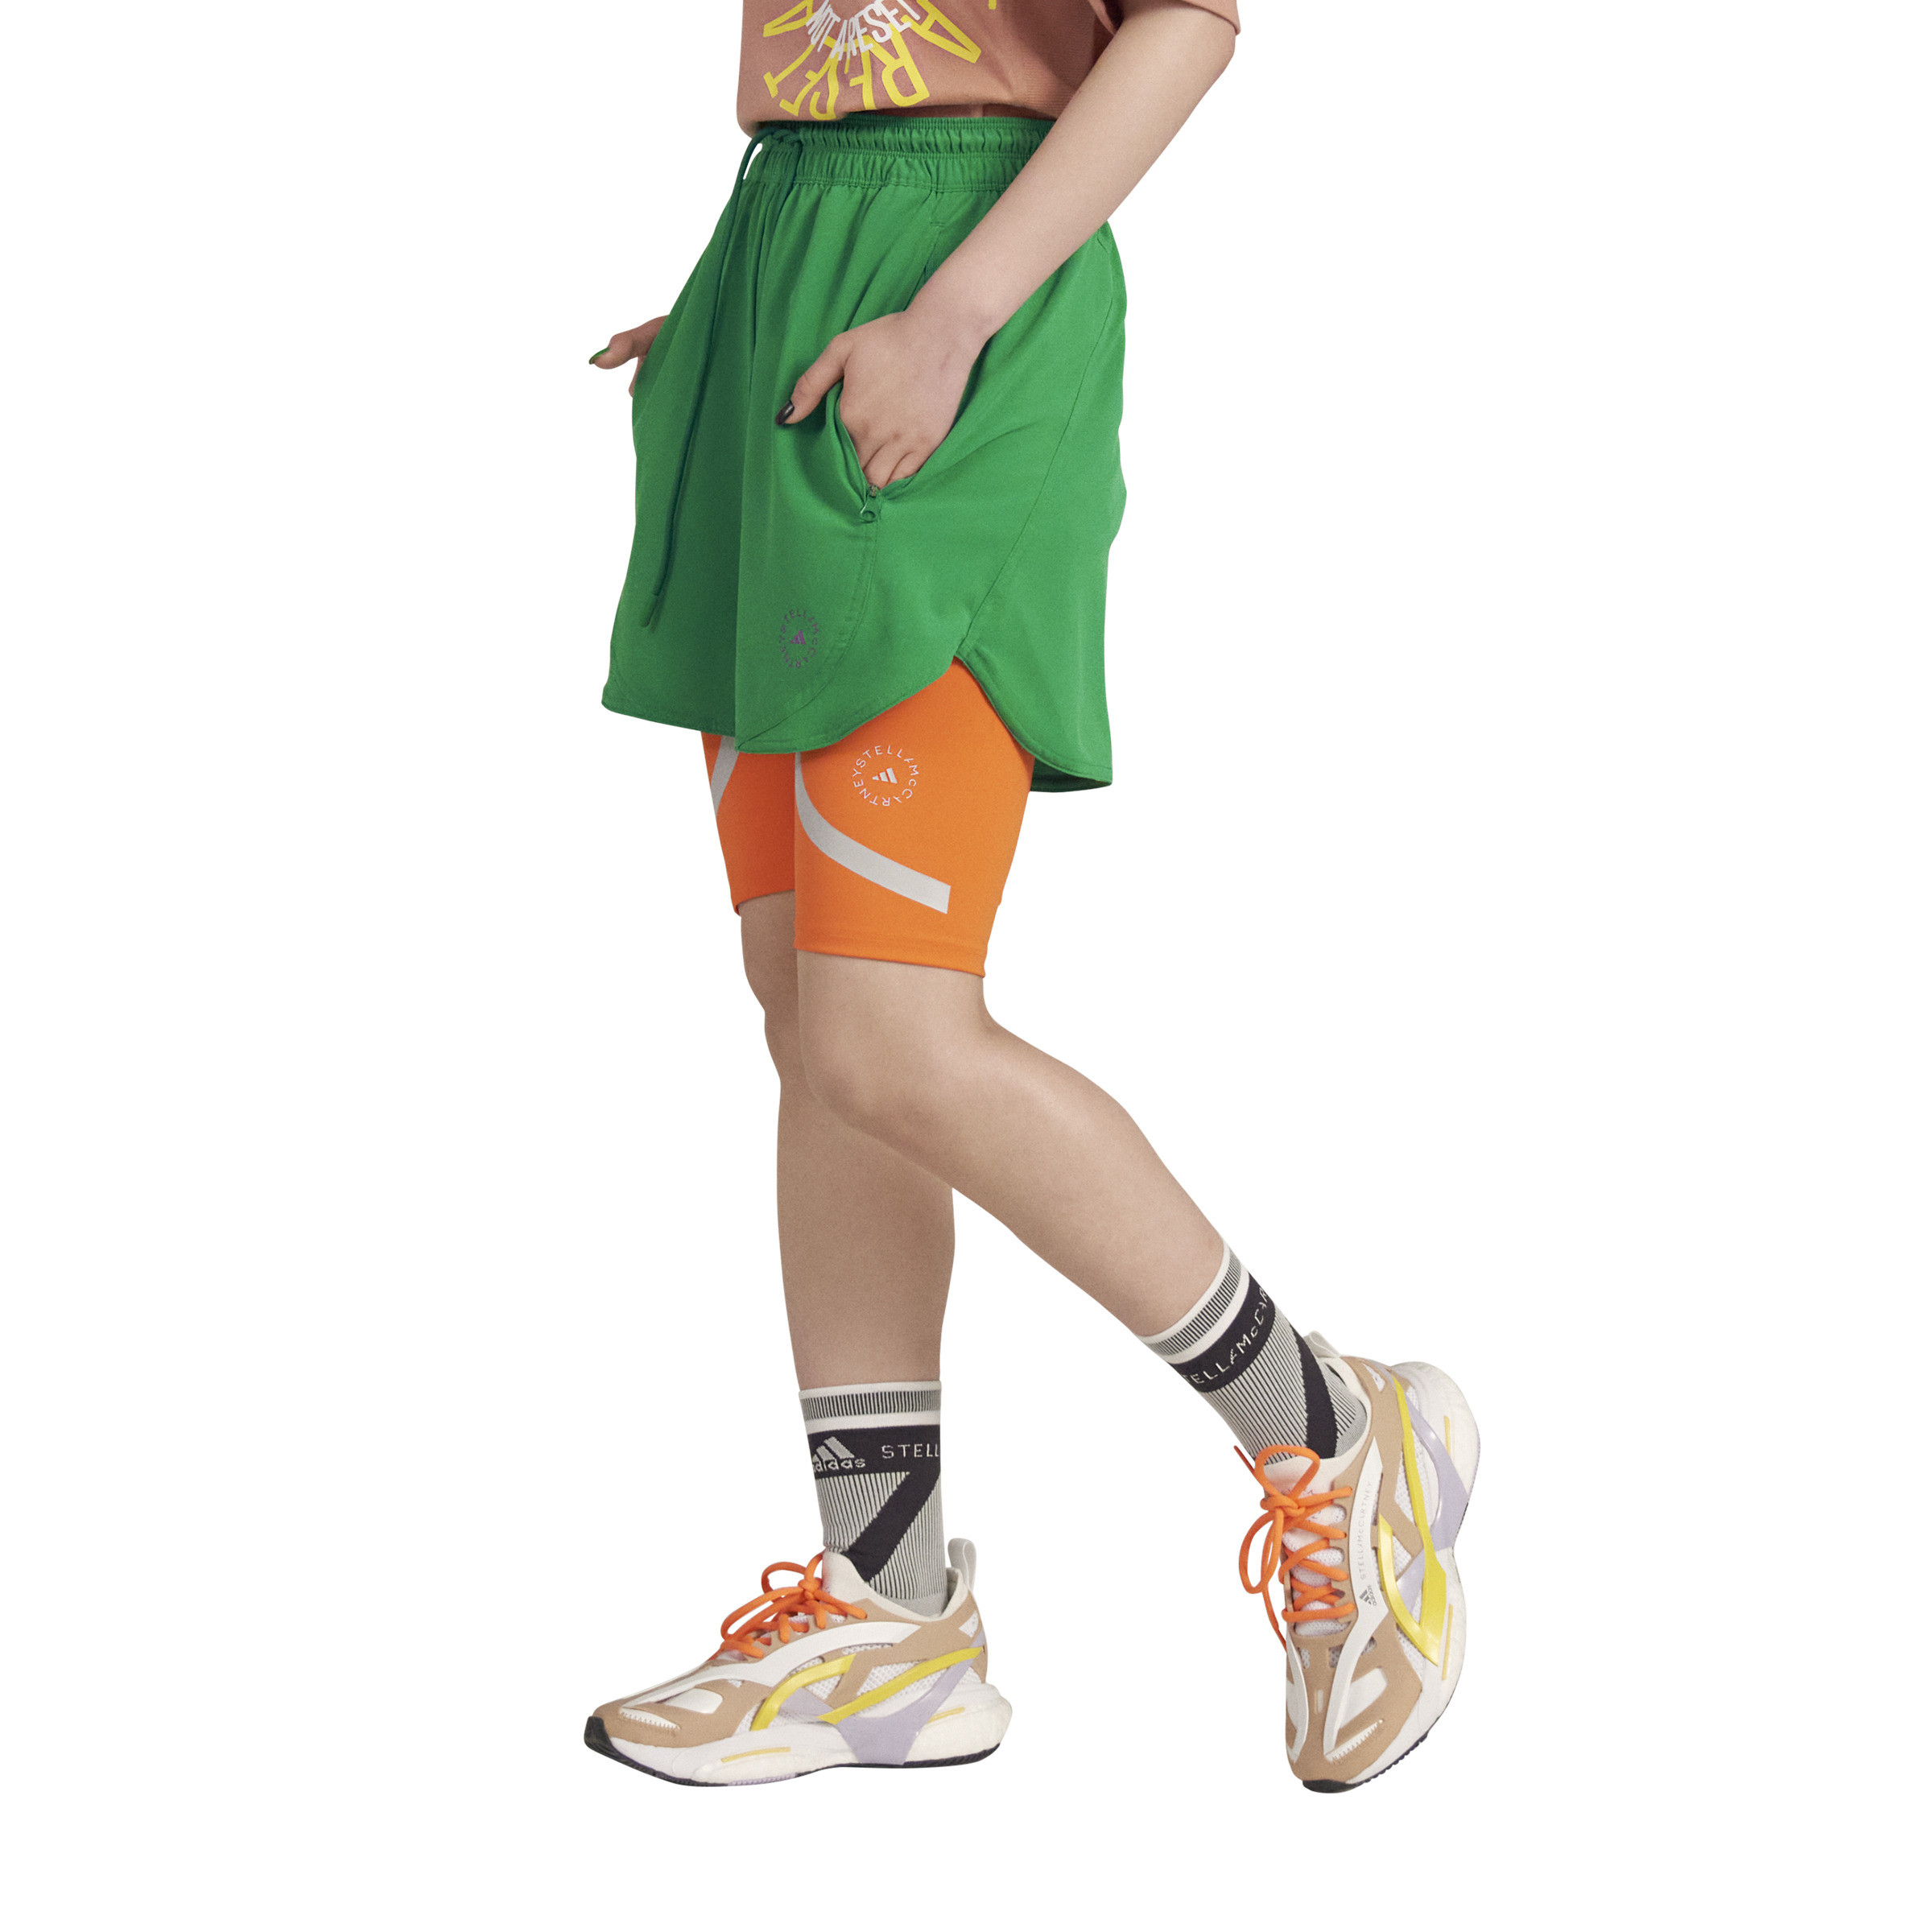 Adidas by Stella McCartney - TruePurpose training shorts, Green, large image number 4